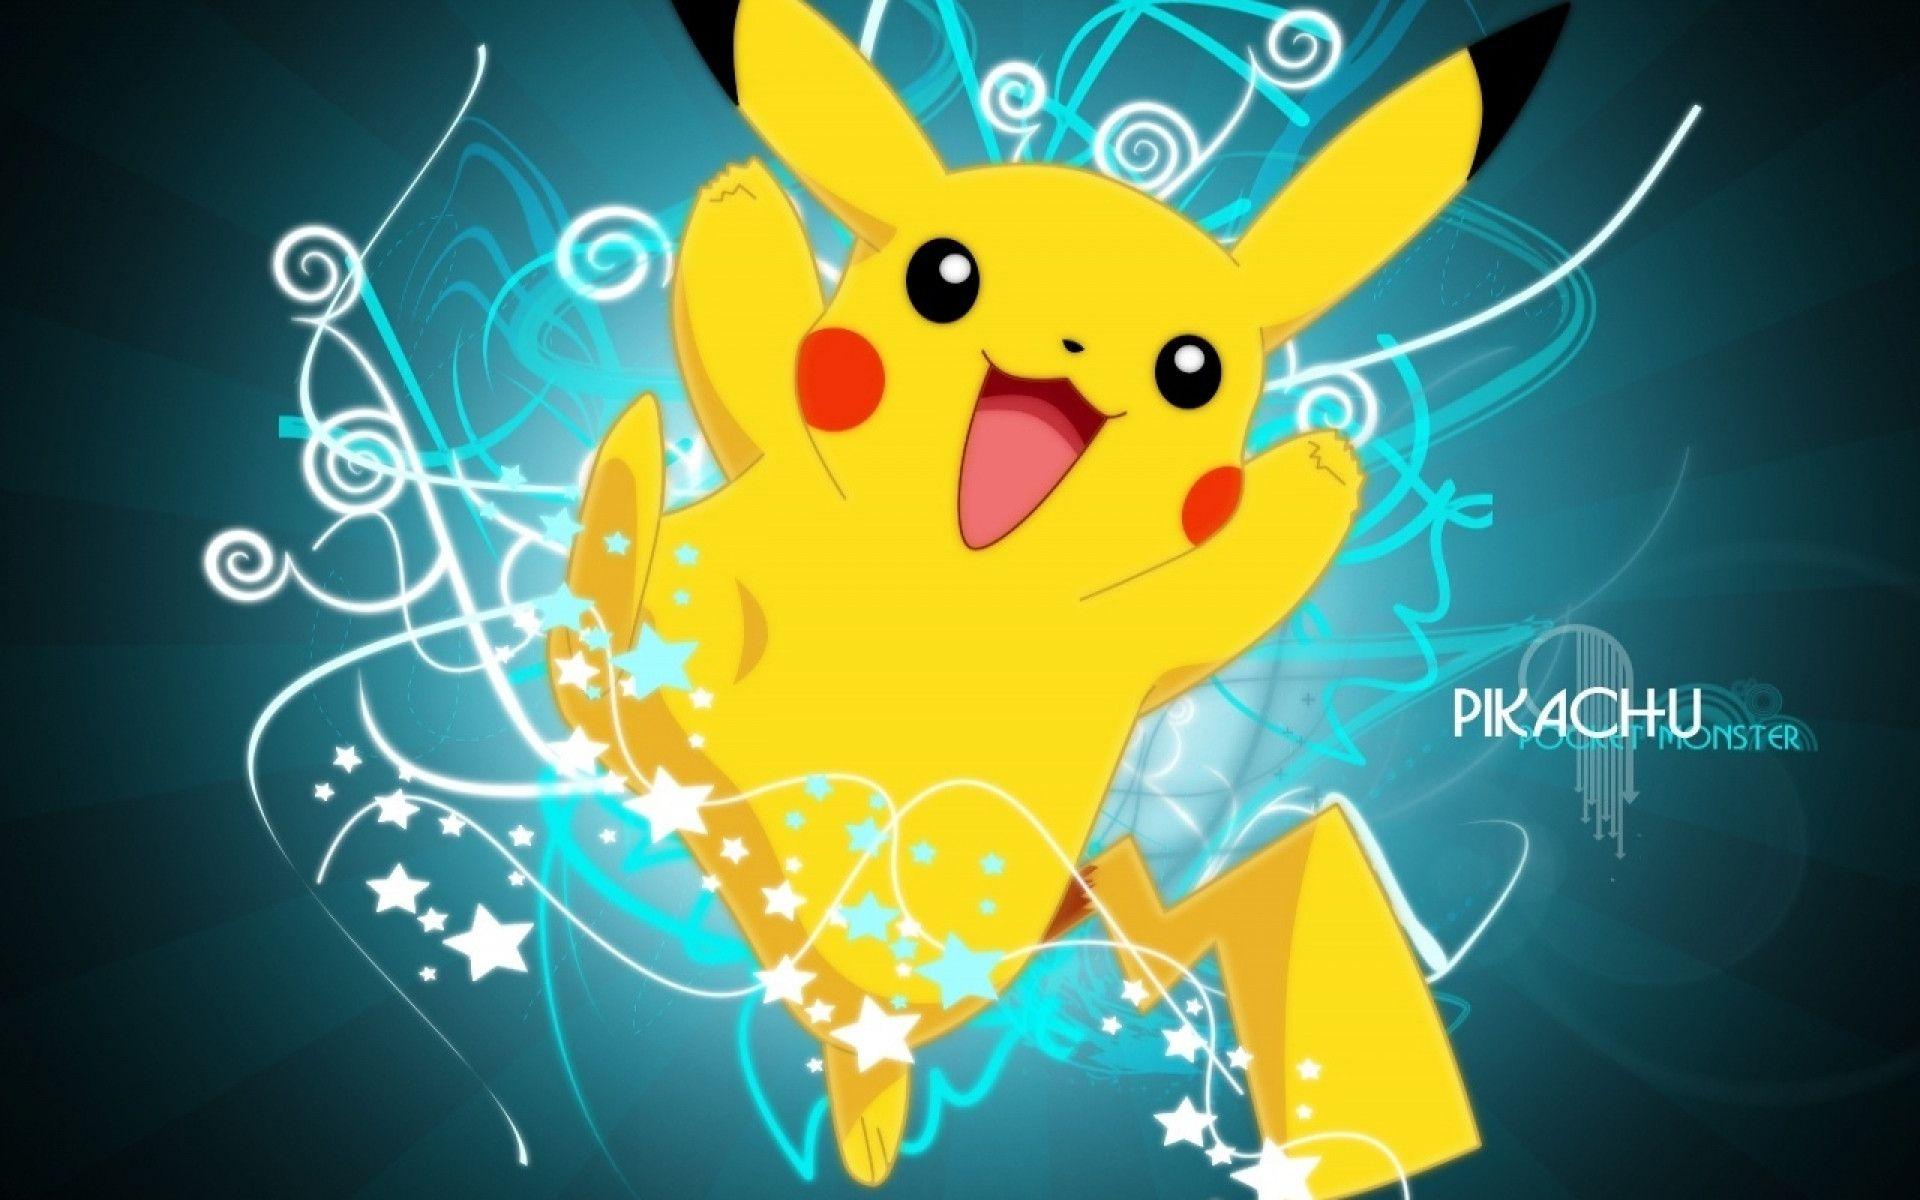 Pikachu celebration abstract art wallpaper